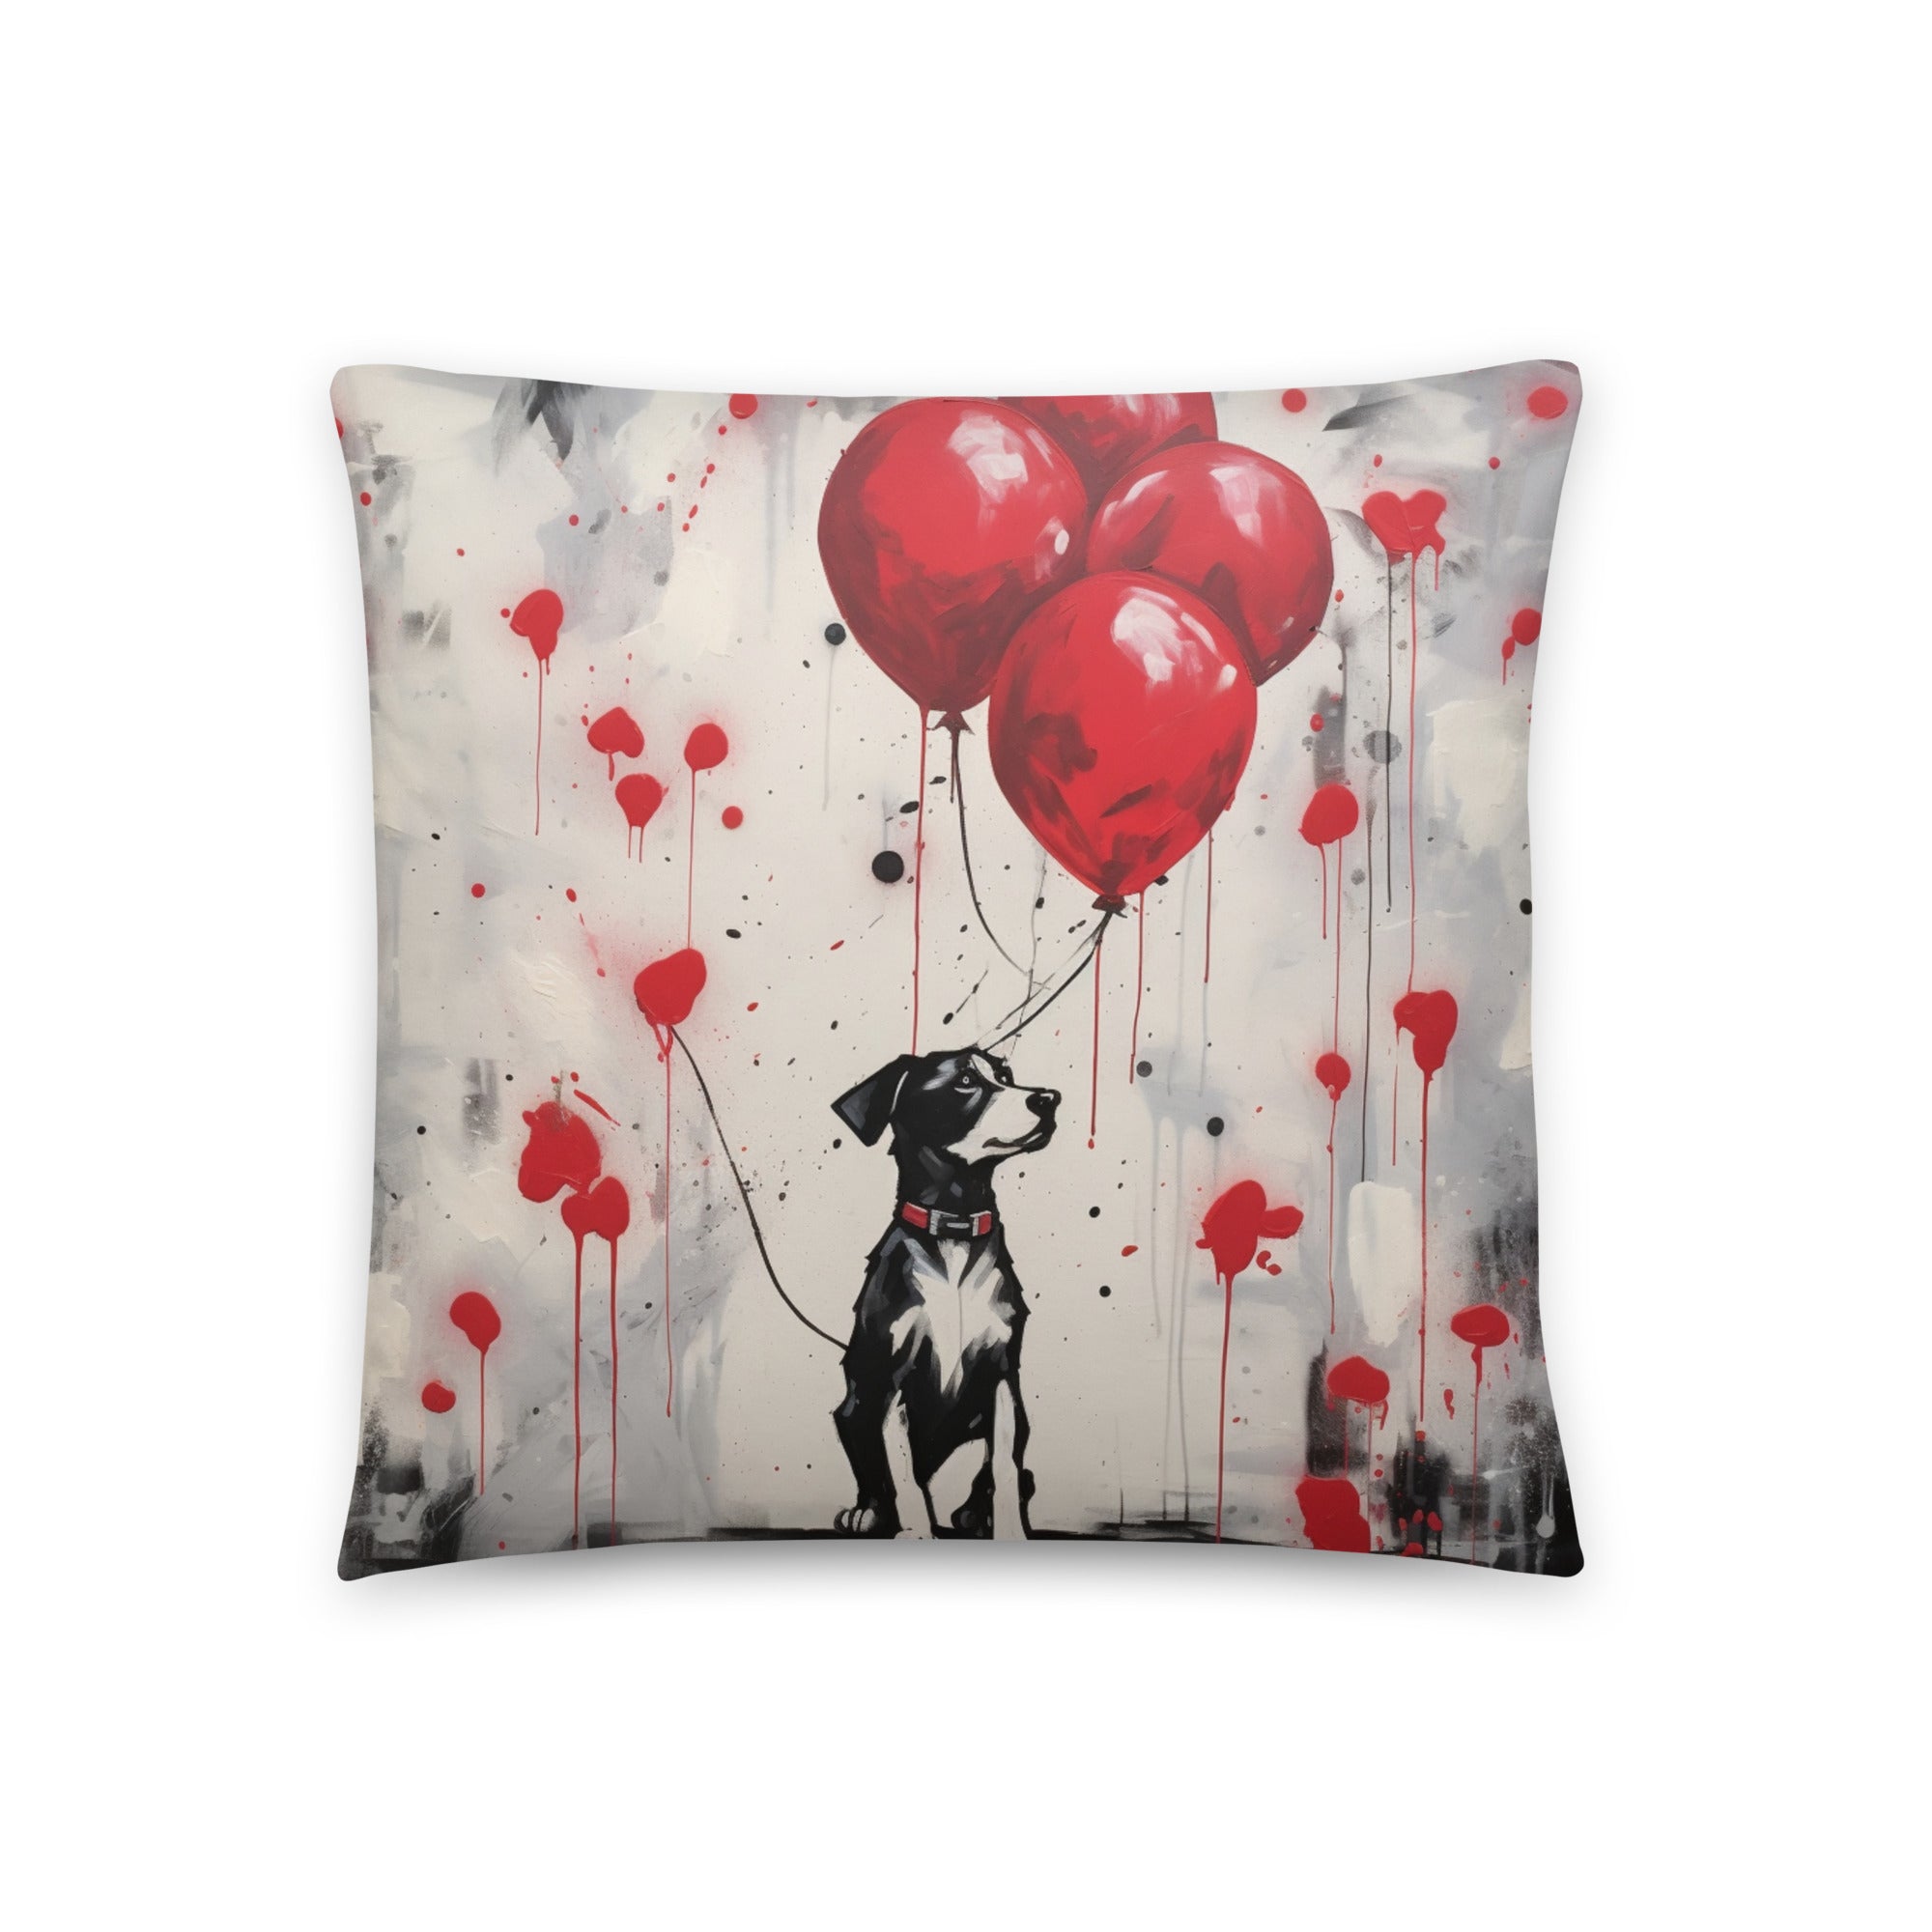 Four Balloons Original Dog Art Original Design Throw Pillow, Choose Fabric - art-inspired-dog-themed-pillow-four-balloons